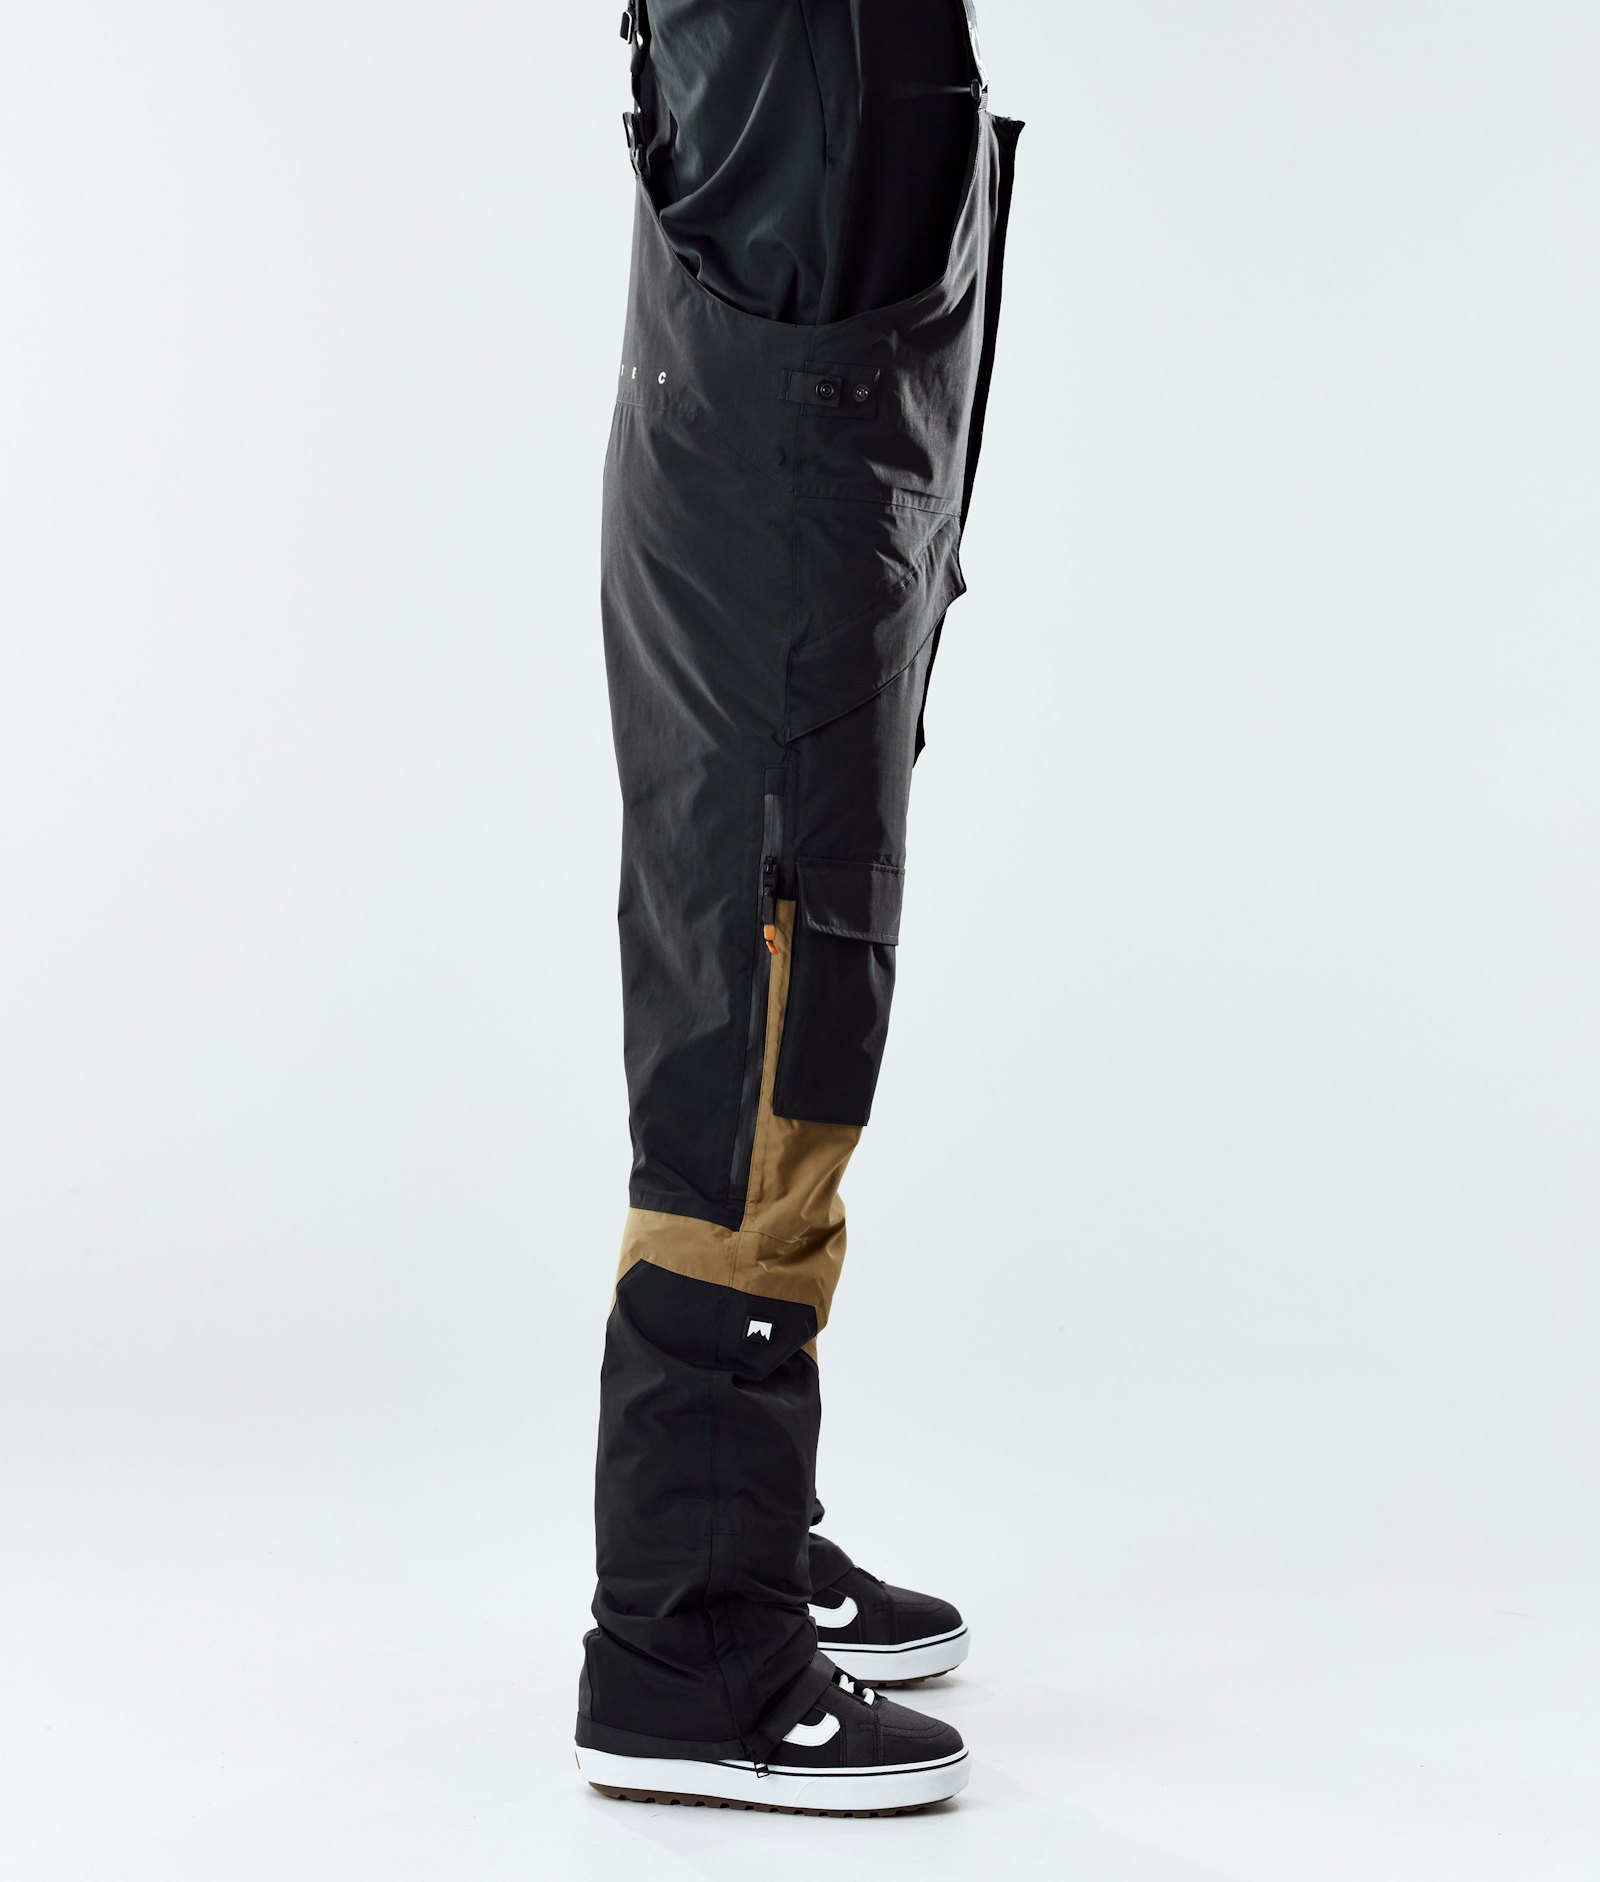 Fawk 2020 Pantalon de Snowboard Homme Black/Gold